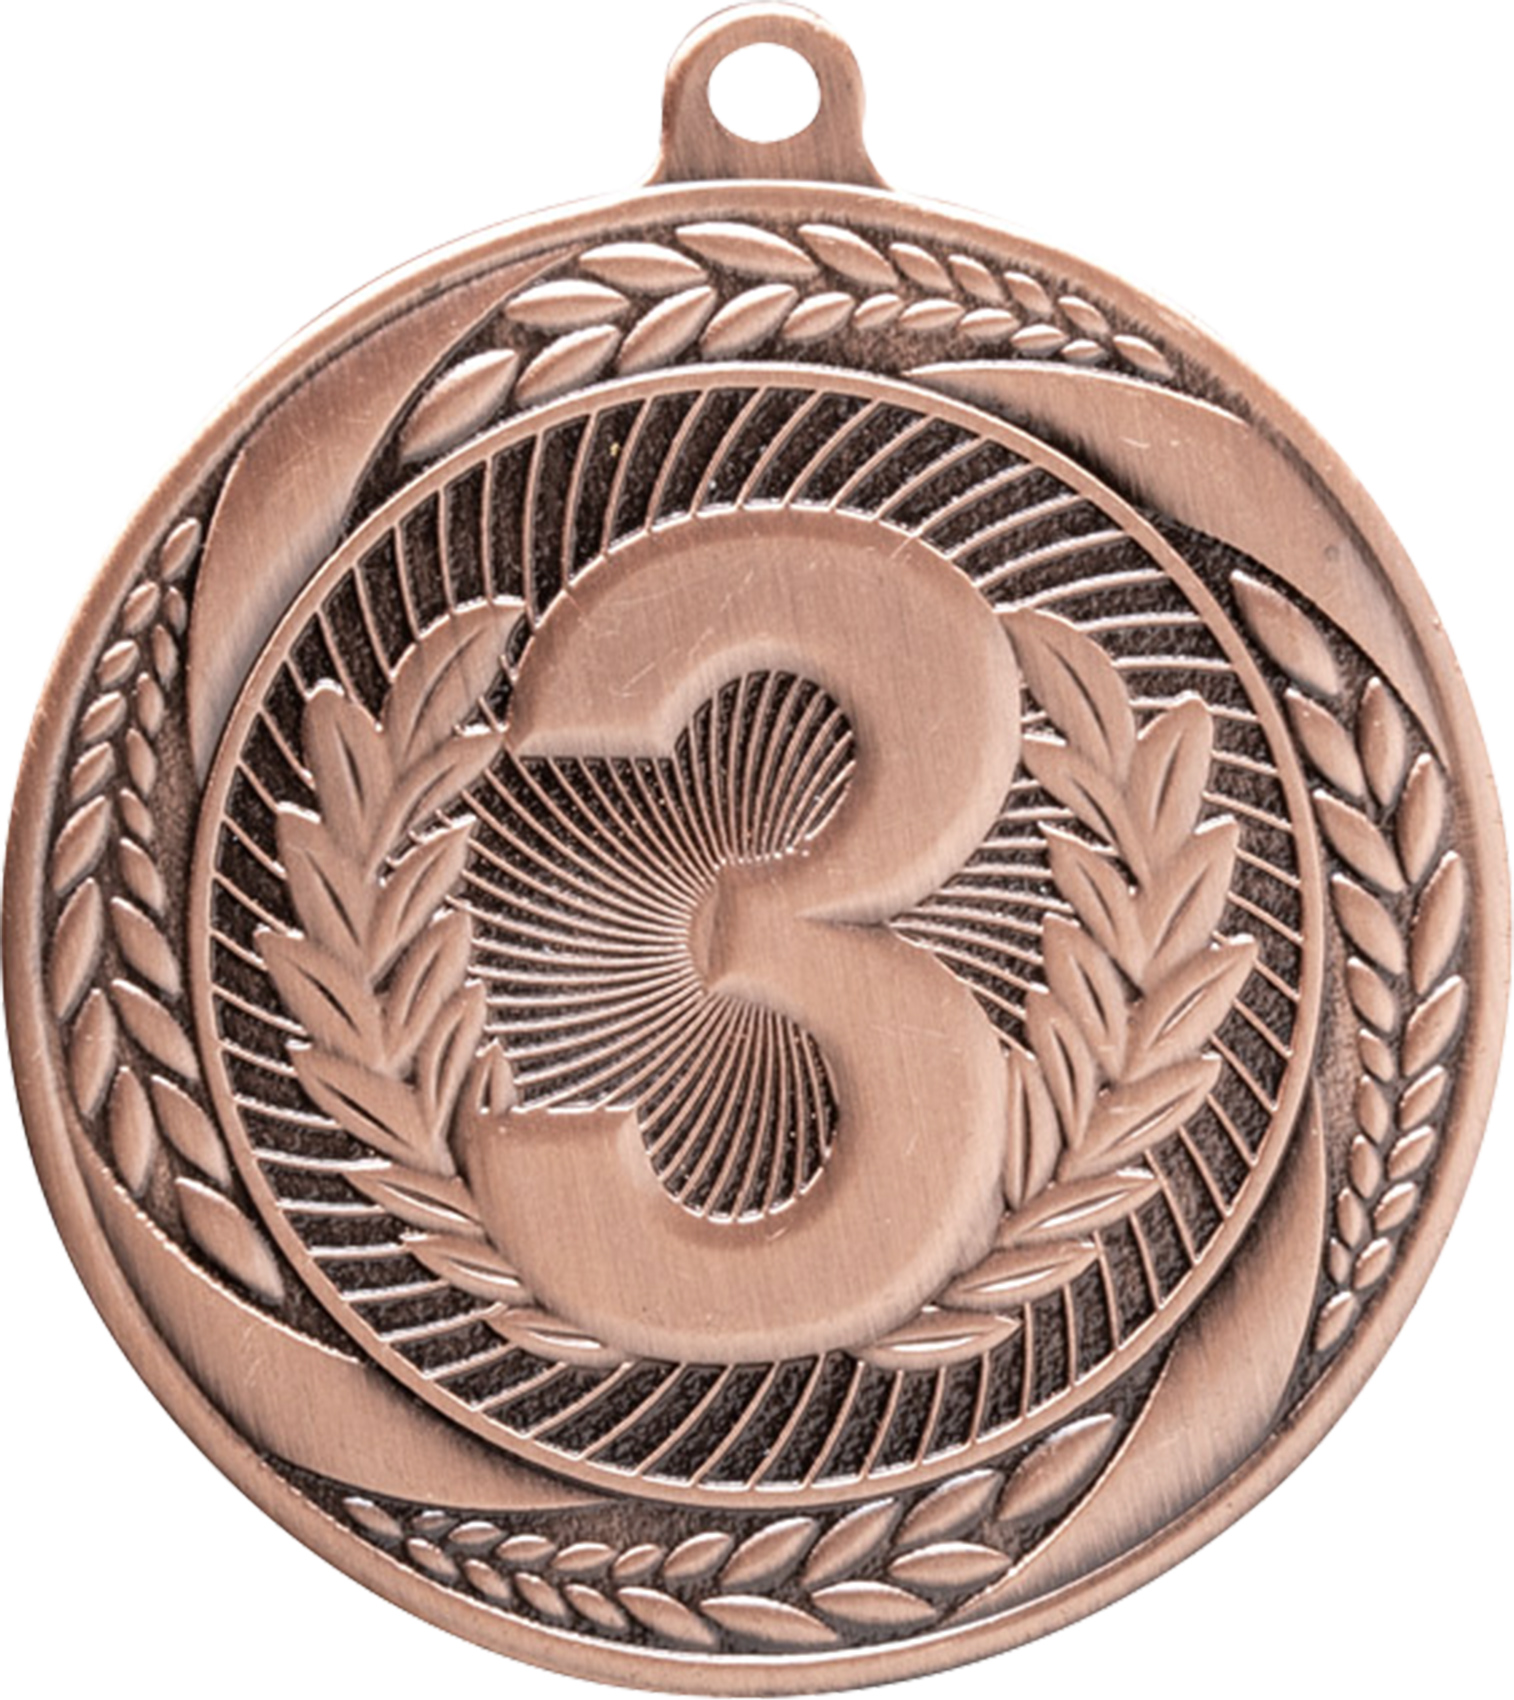 3rd Laurel Wreath Medal